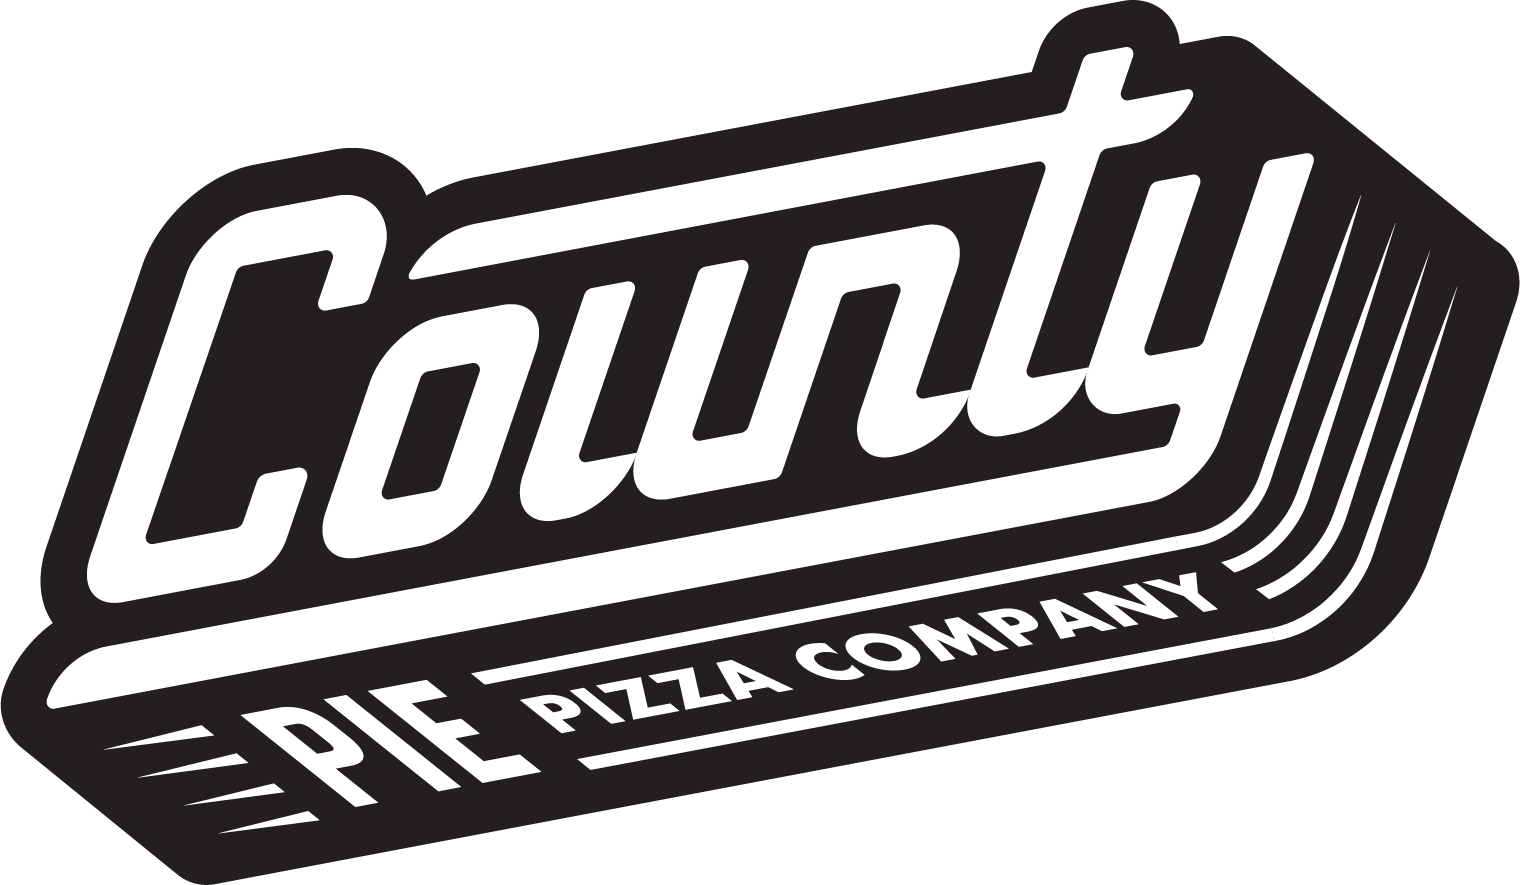 County Pie